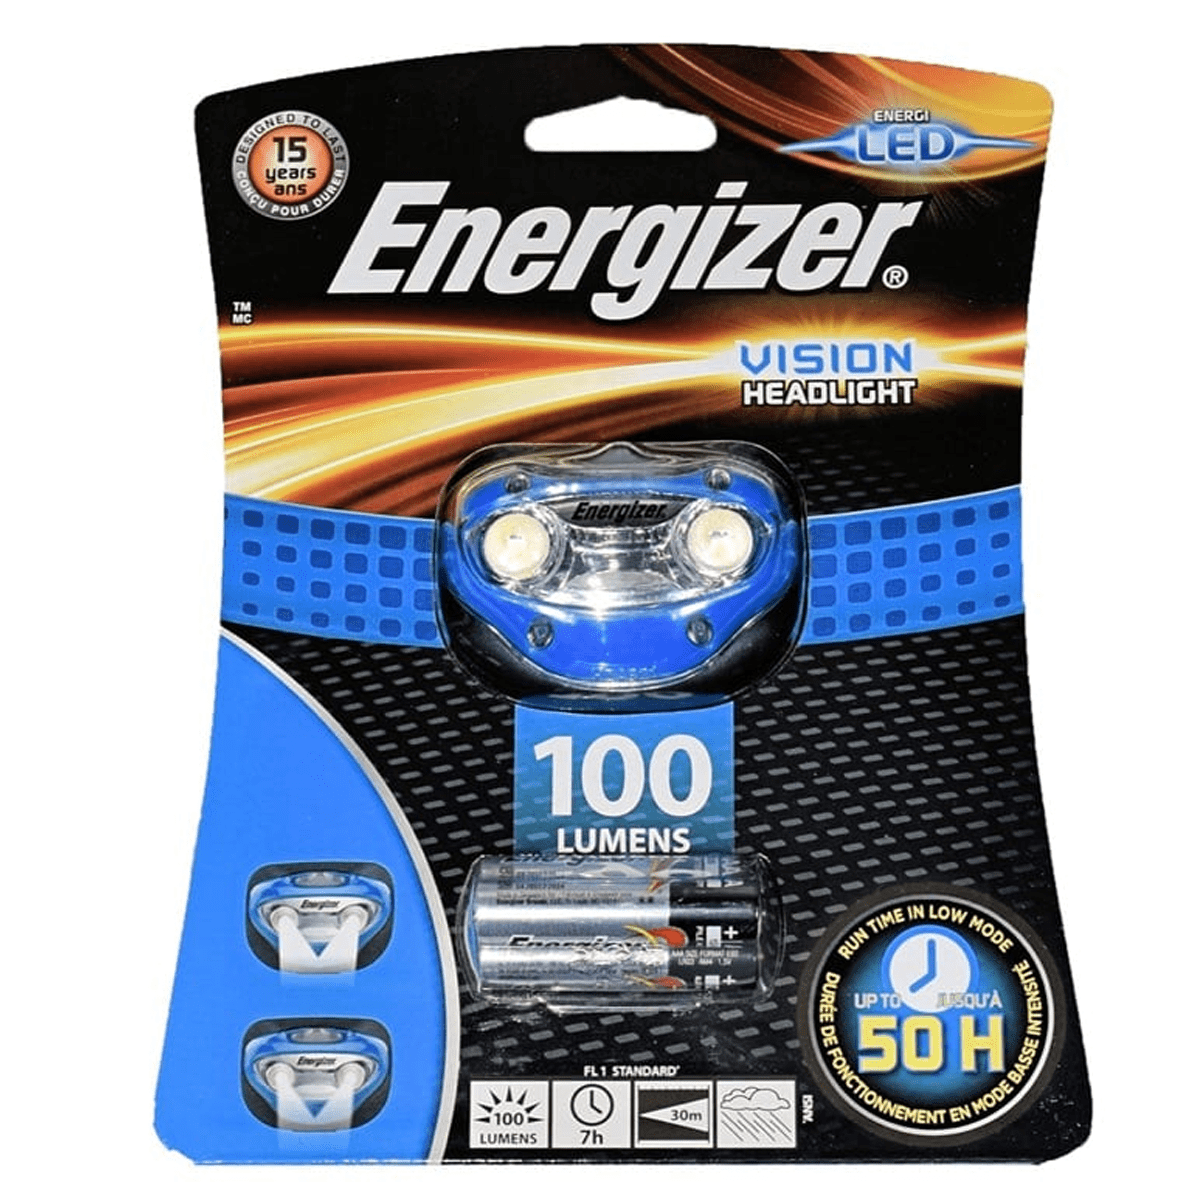 Energizer Vision LED Headlight (100lm)